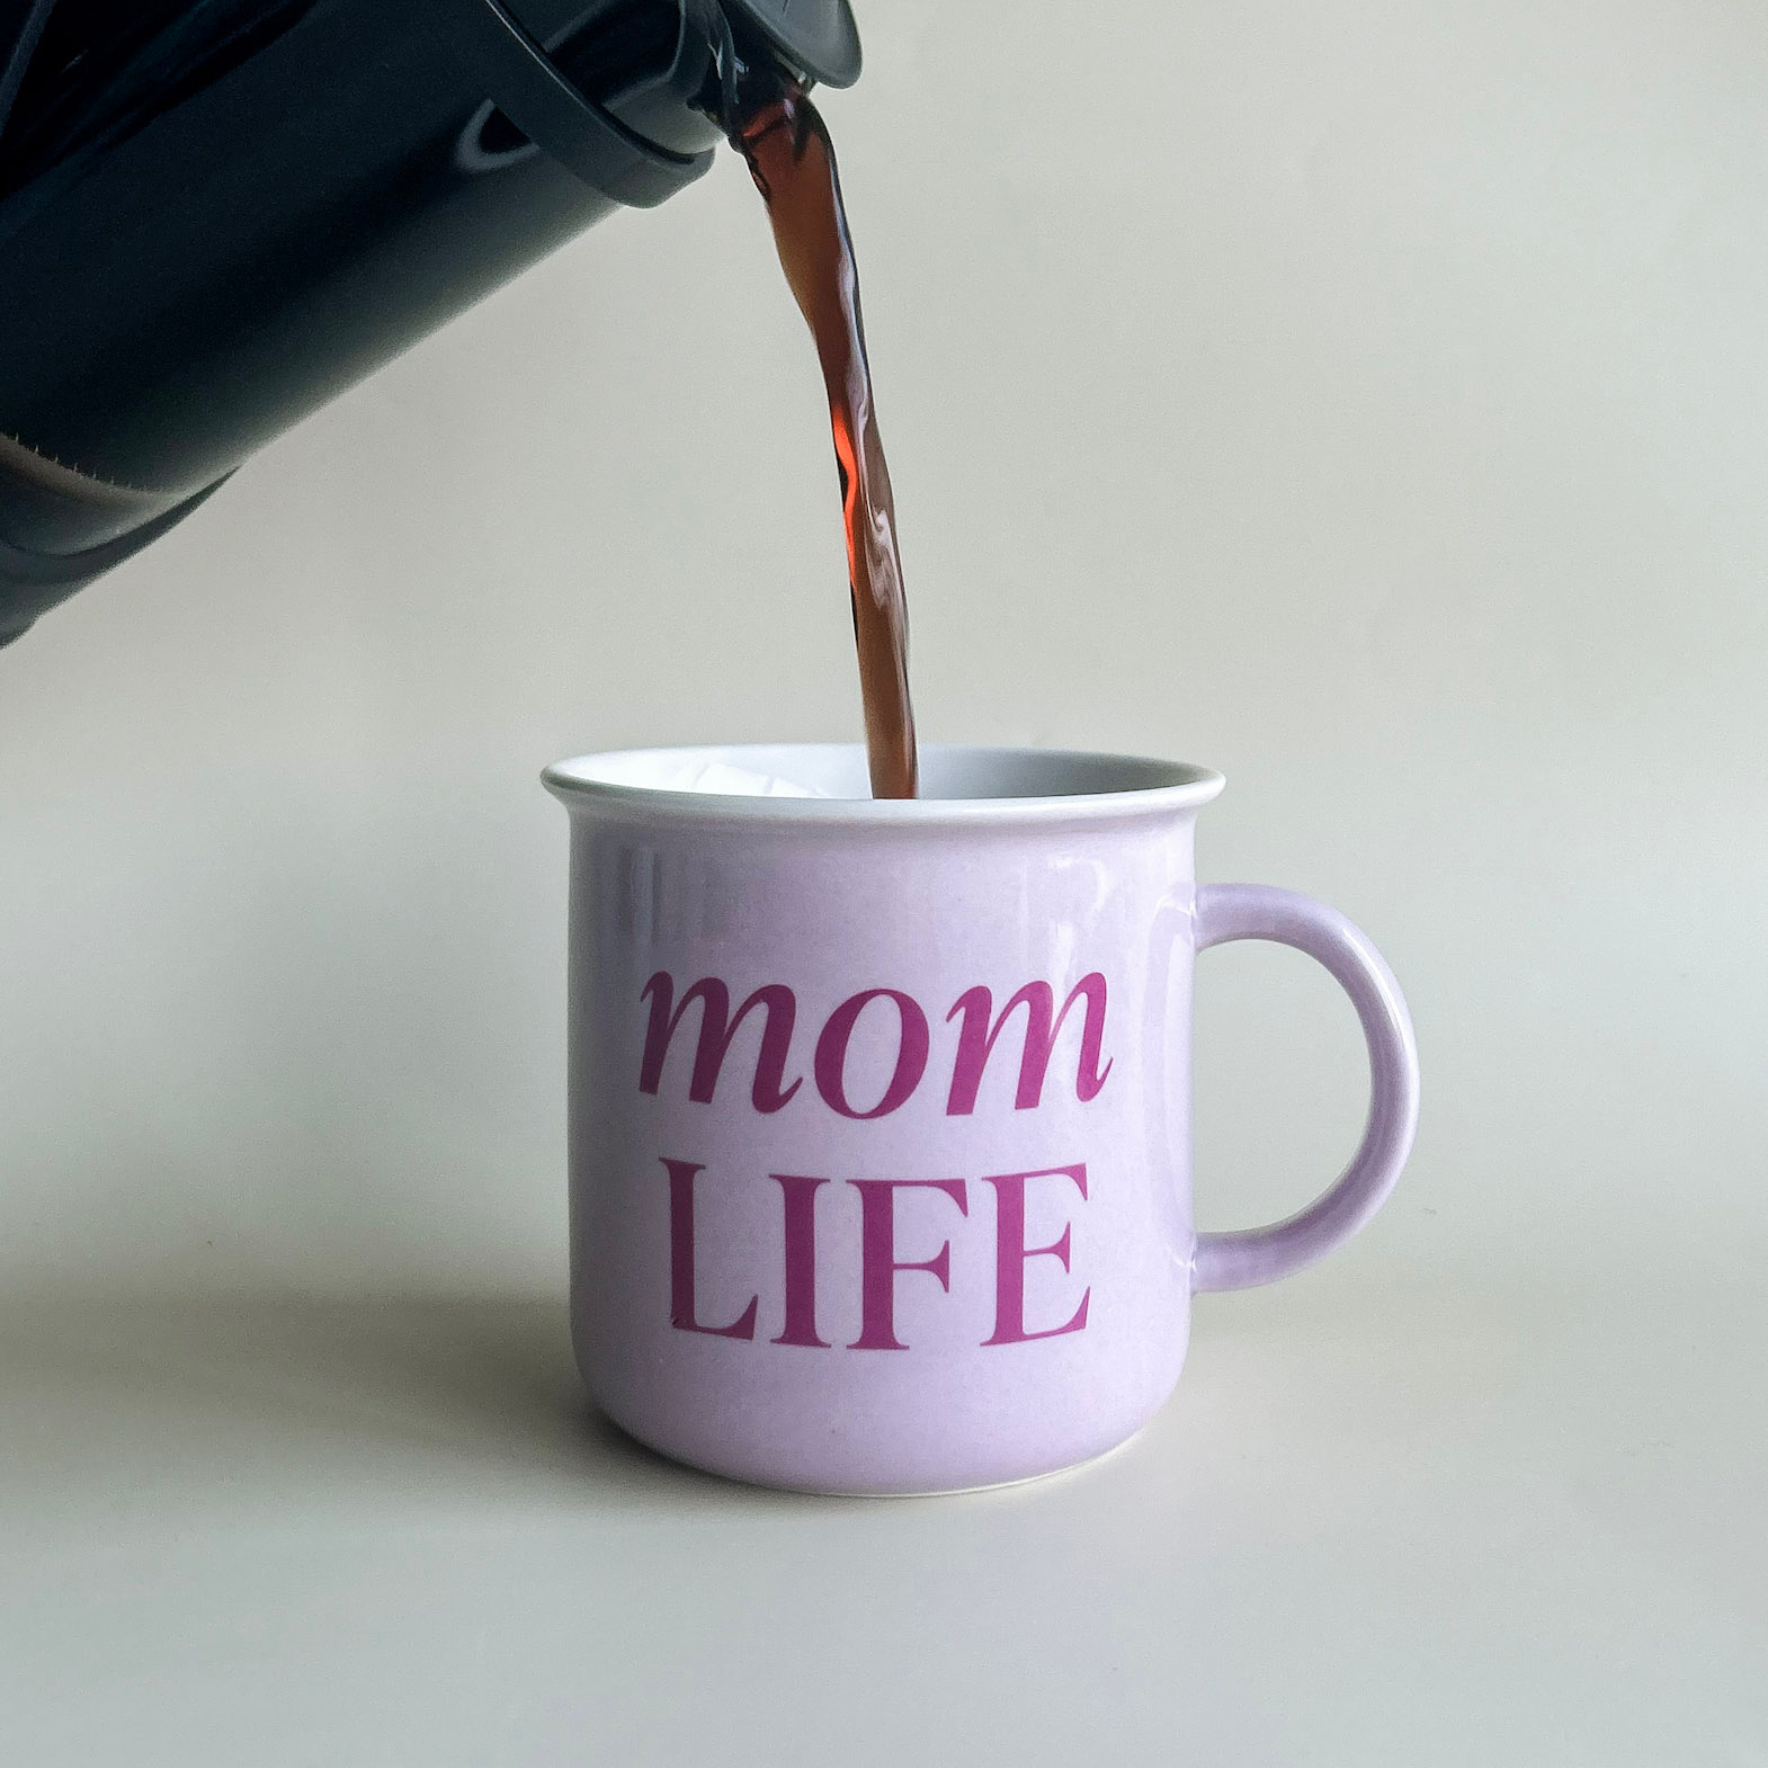 Sweet Water Decor - *NEW* Mom Life 11 oz Campfire Coffee Mug - Home Decor